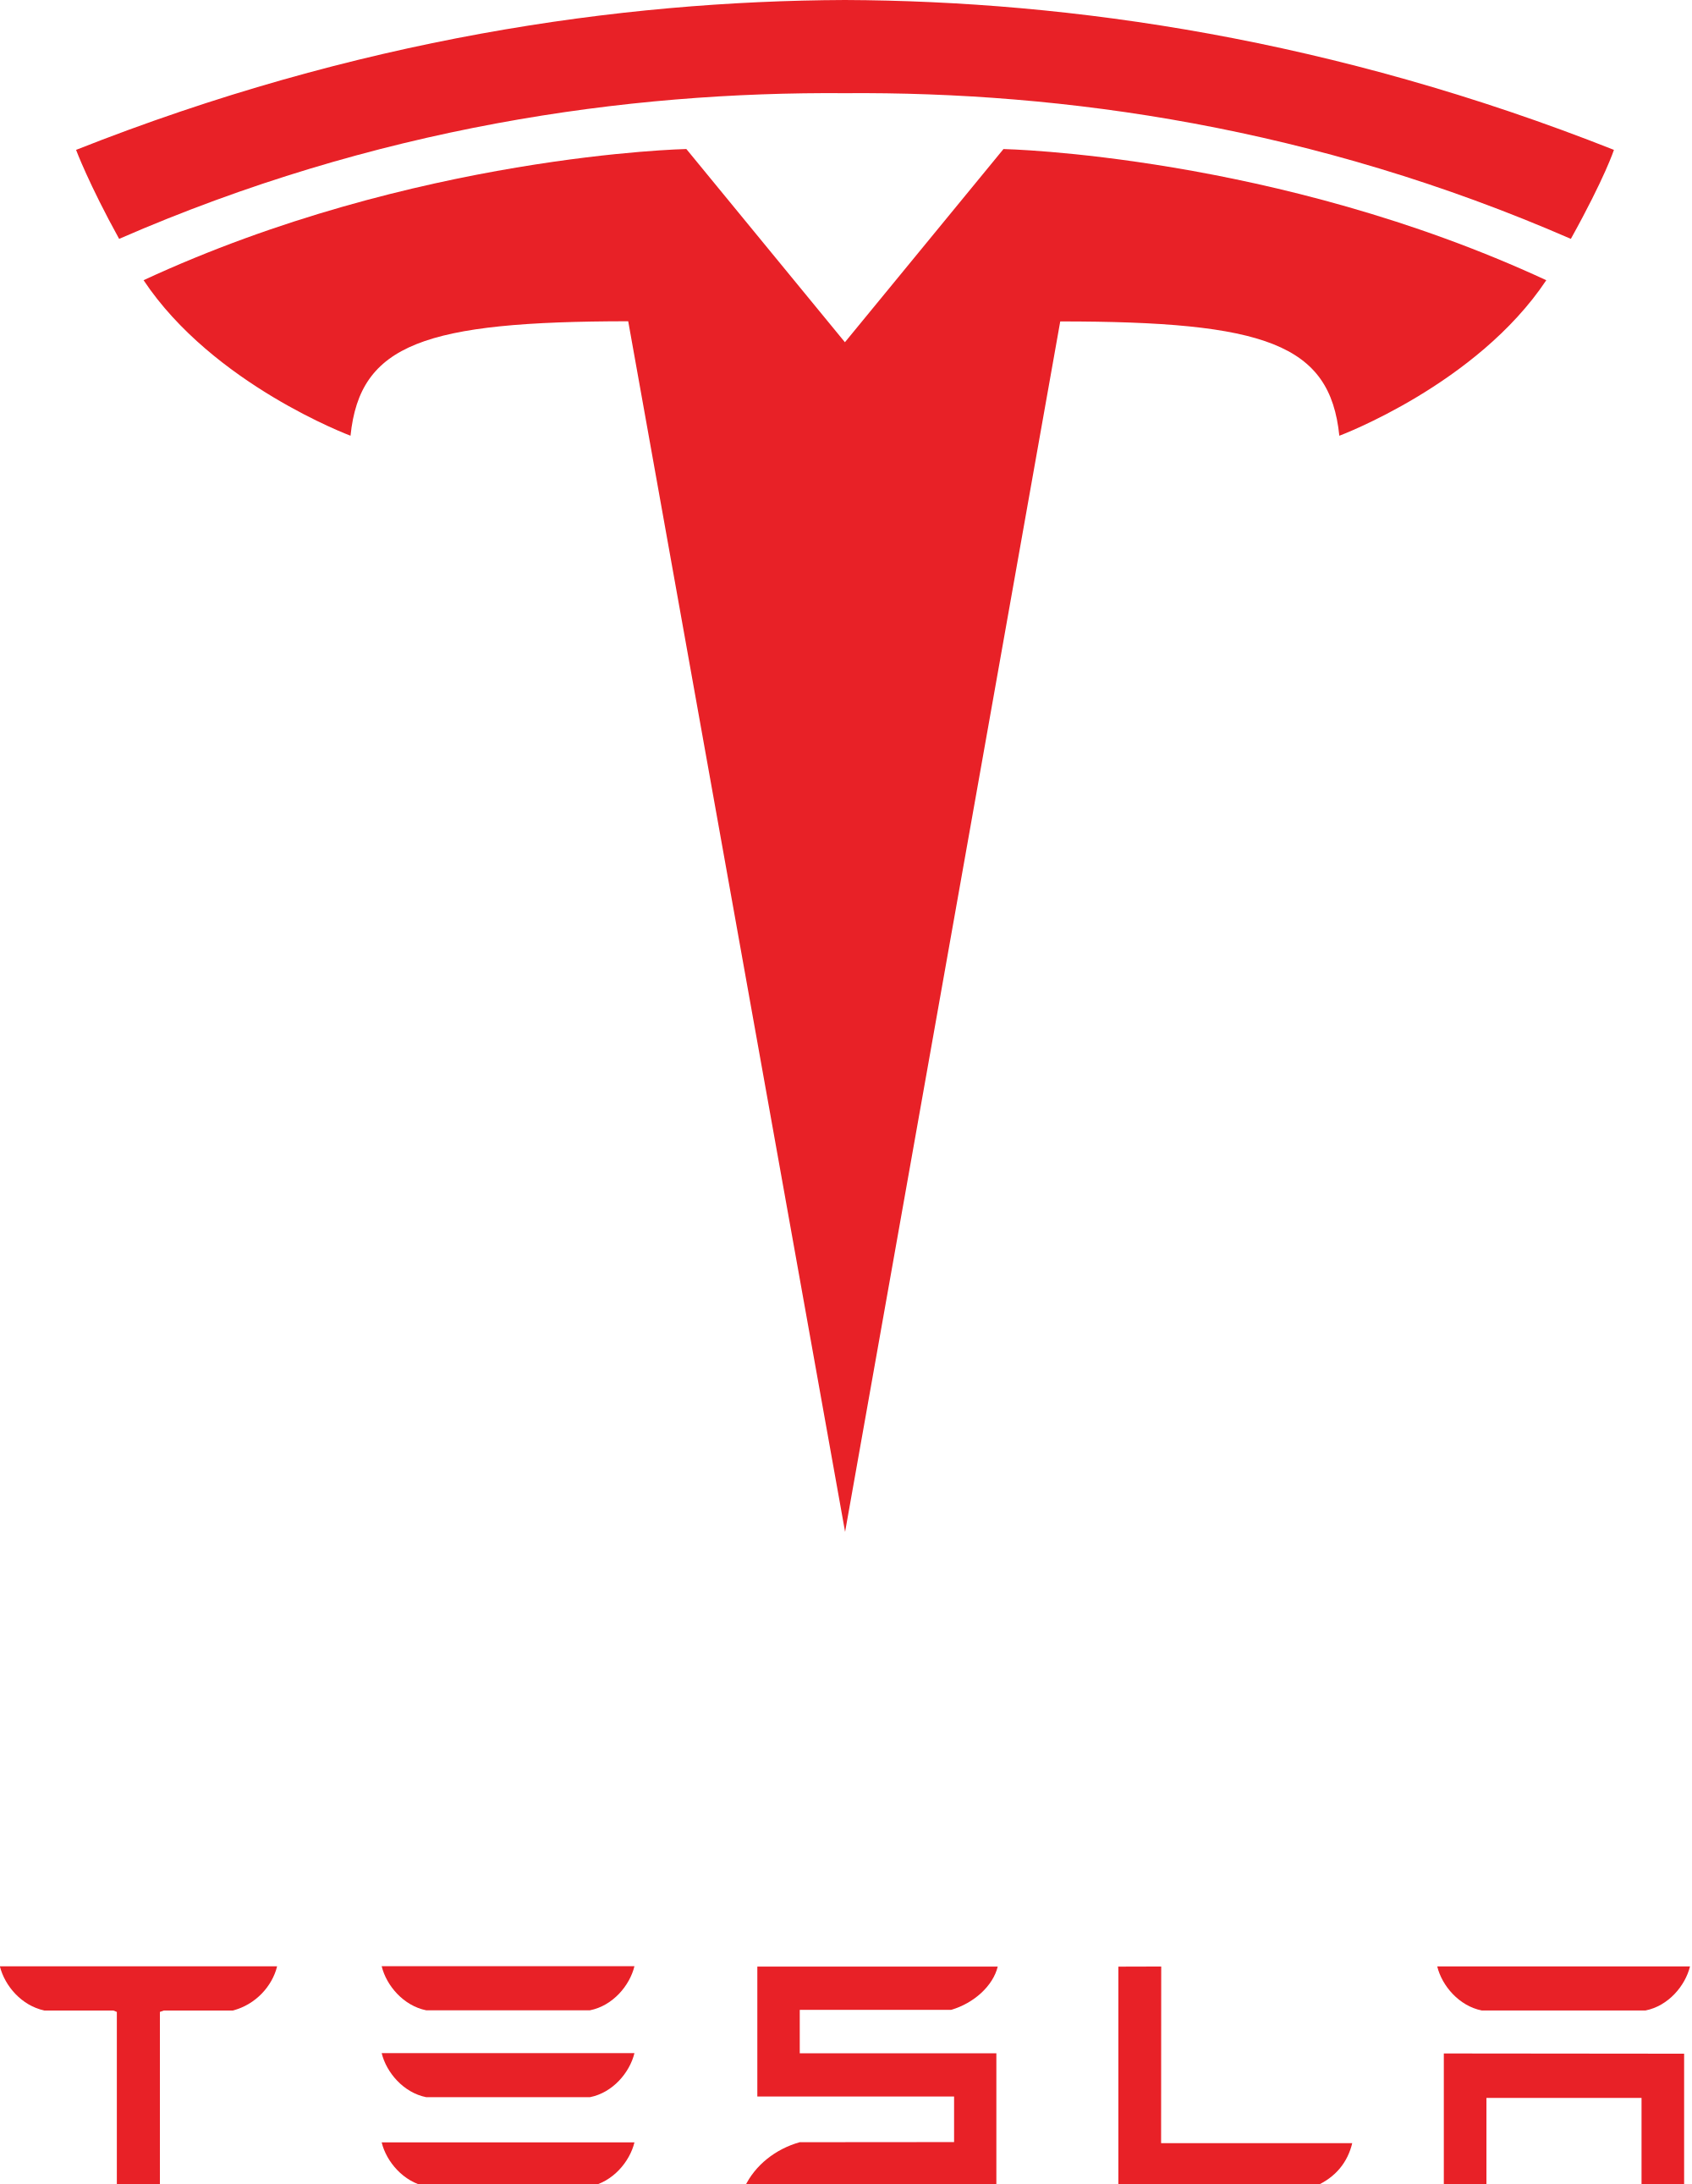 Tesla logo PNG images 